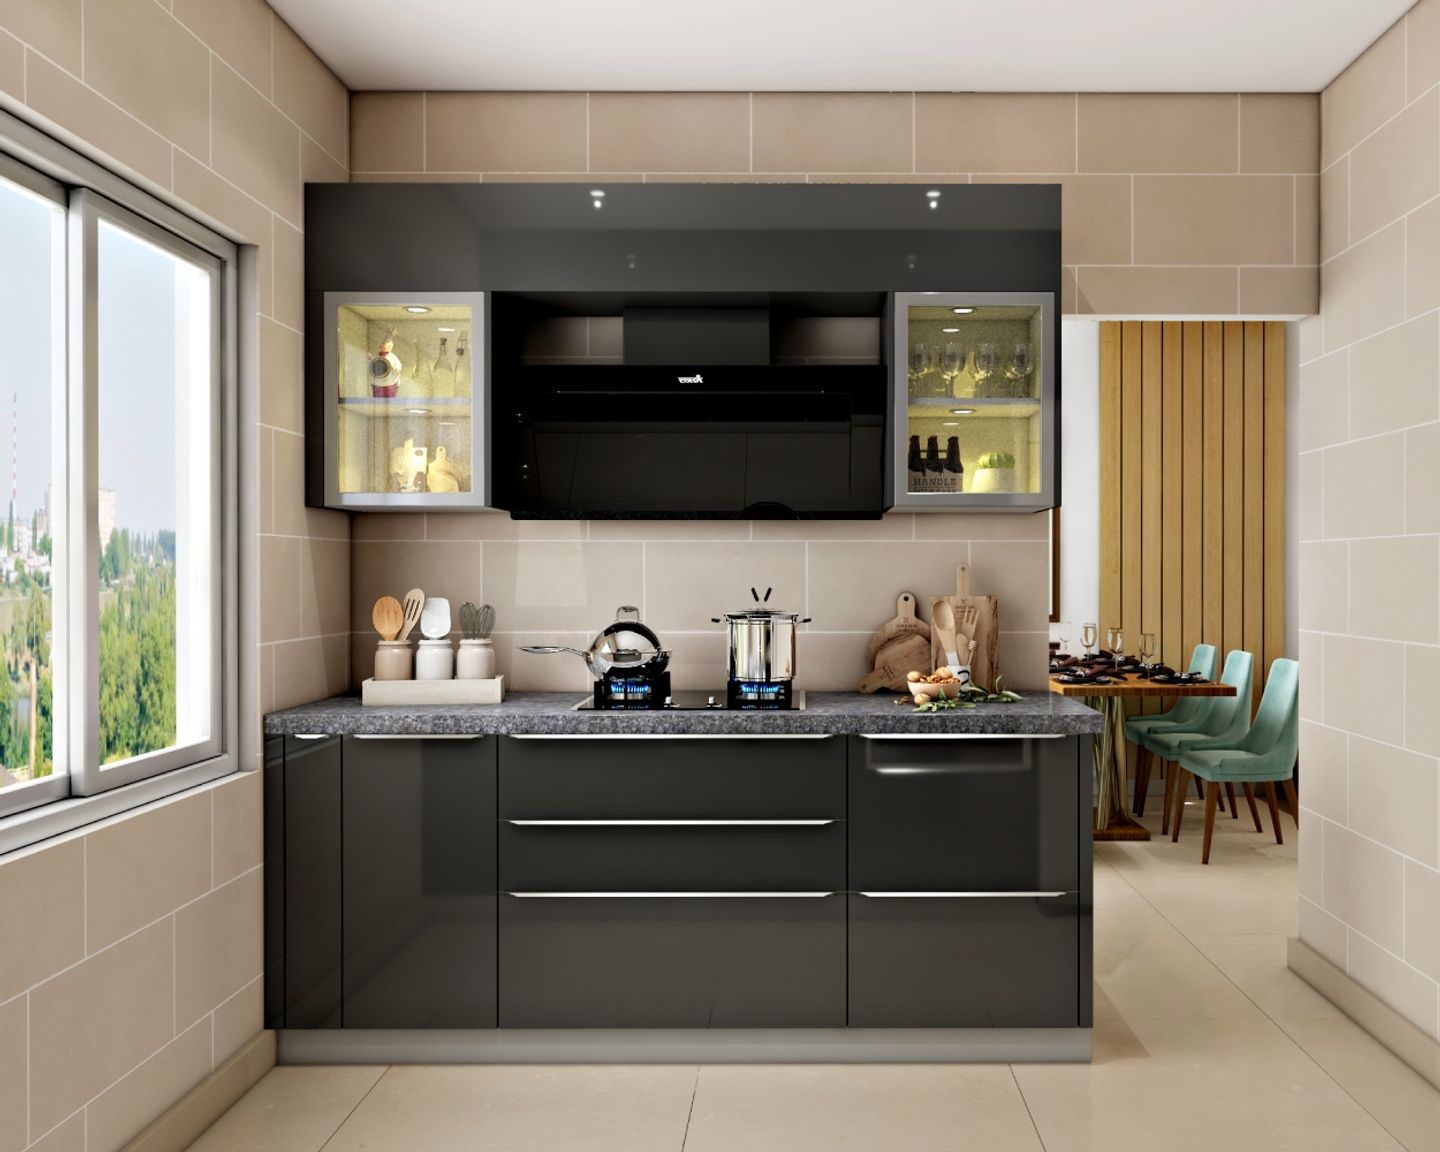 Slate Grey Glossy Kitchen Design With Beige Subway Backsplash And Wall Tiles - Livspace